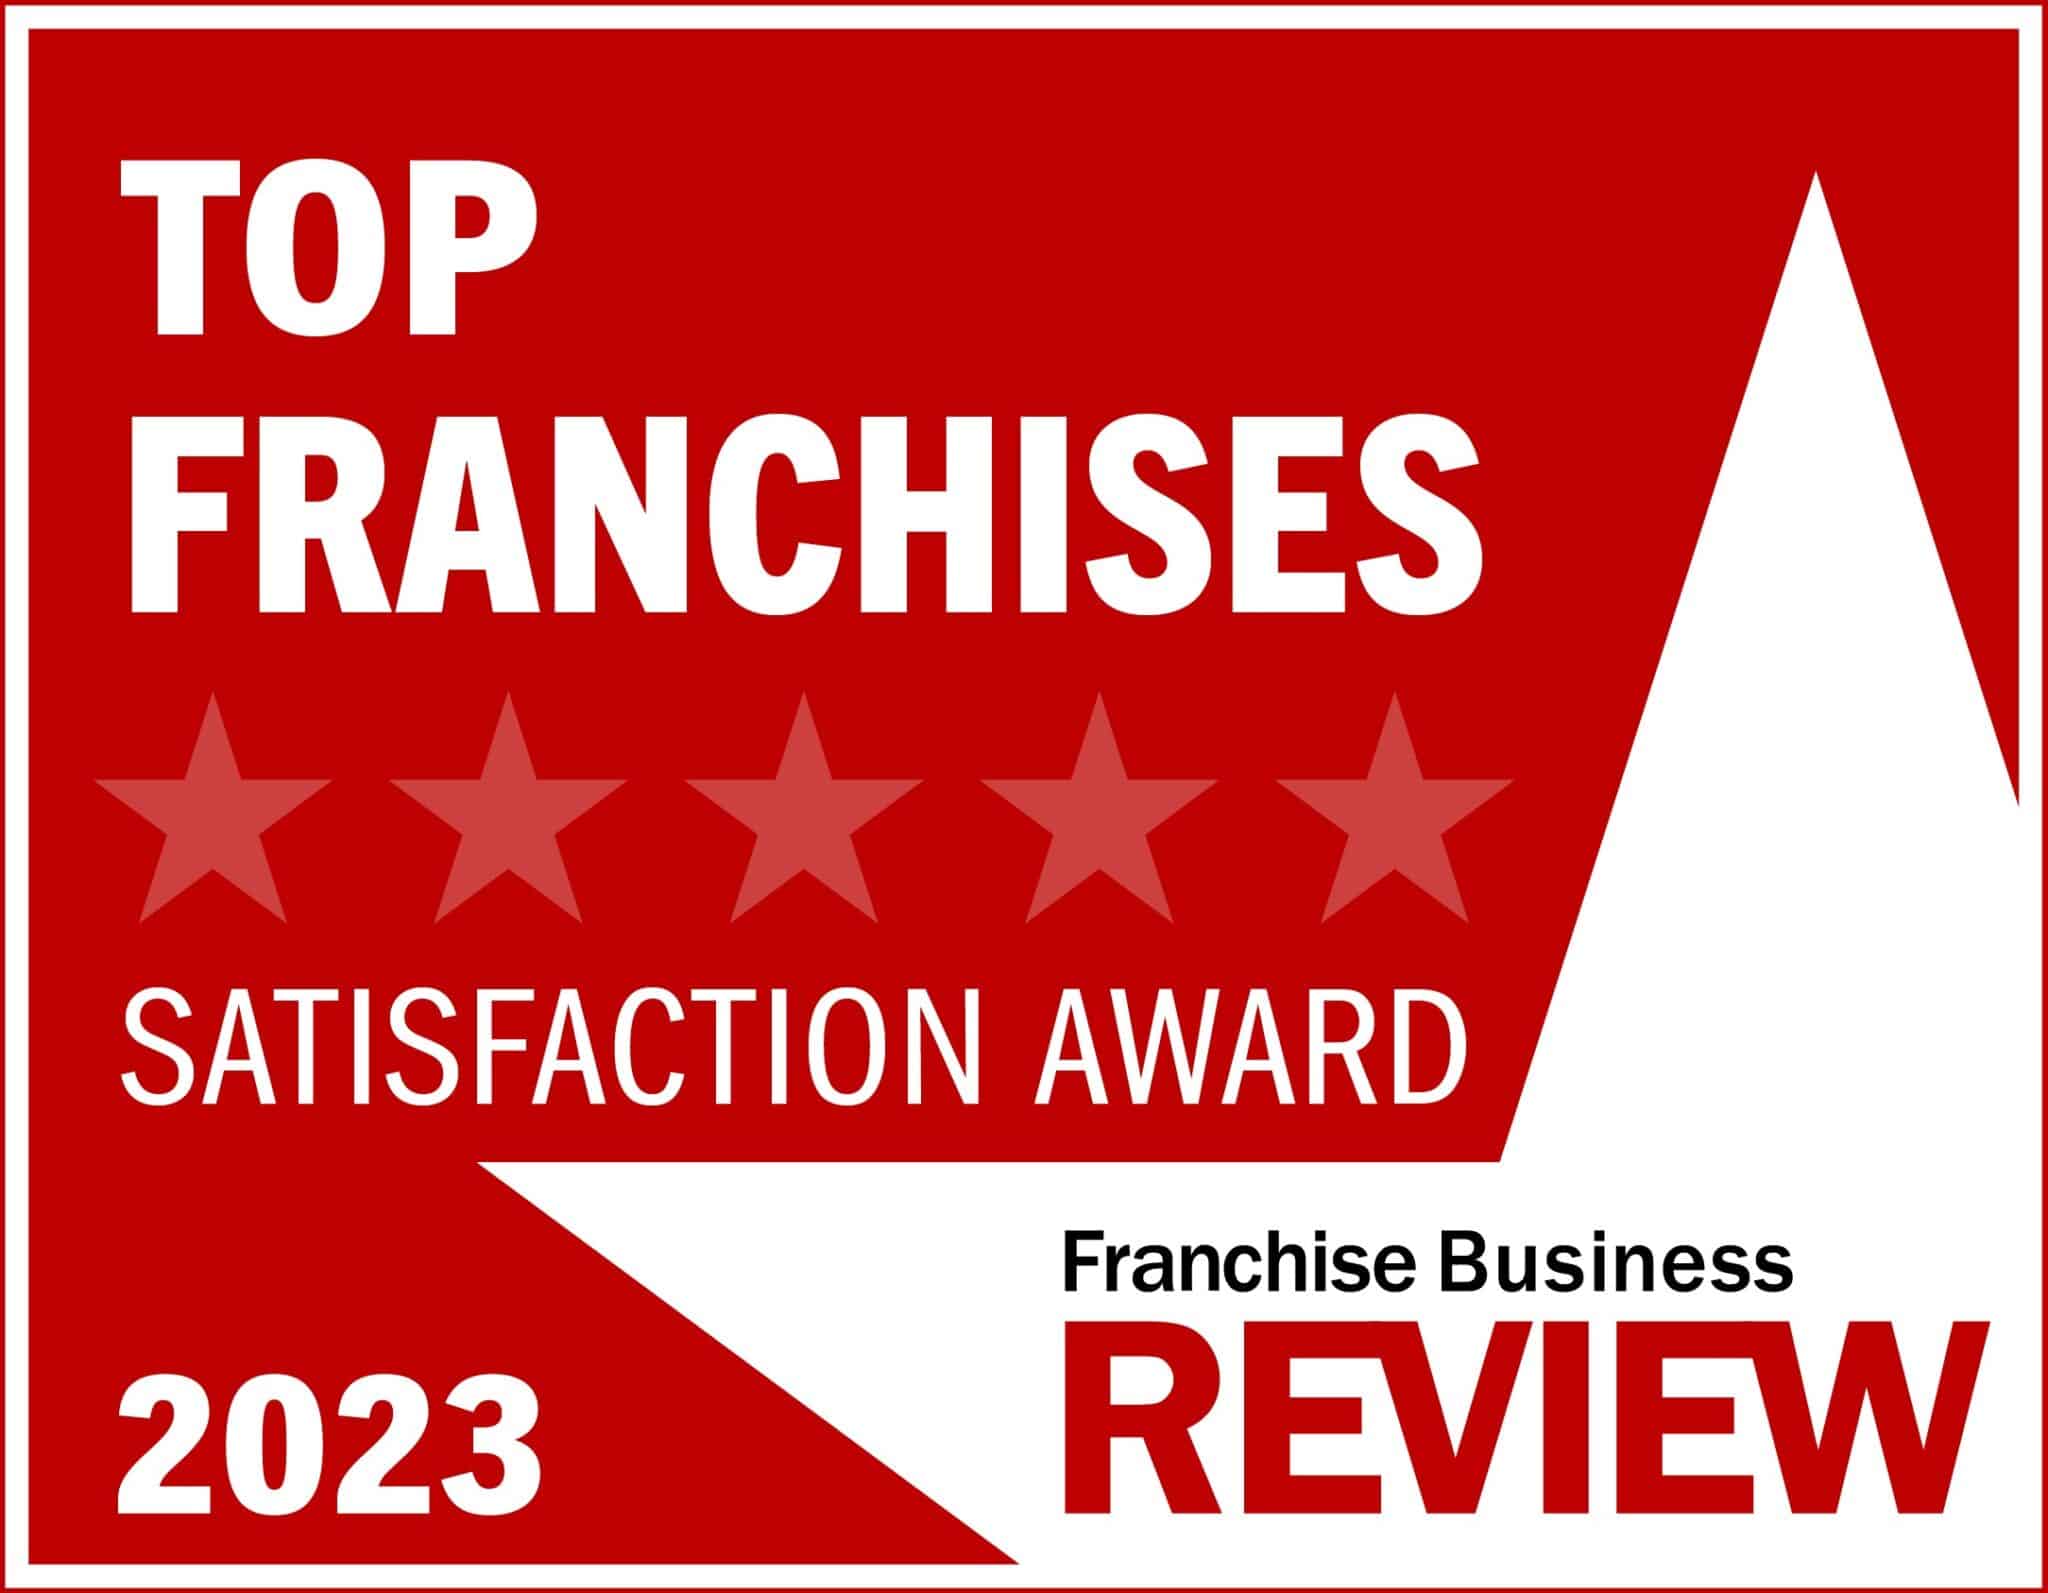 Top Restaurant Franchise Satisfaction Award